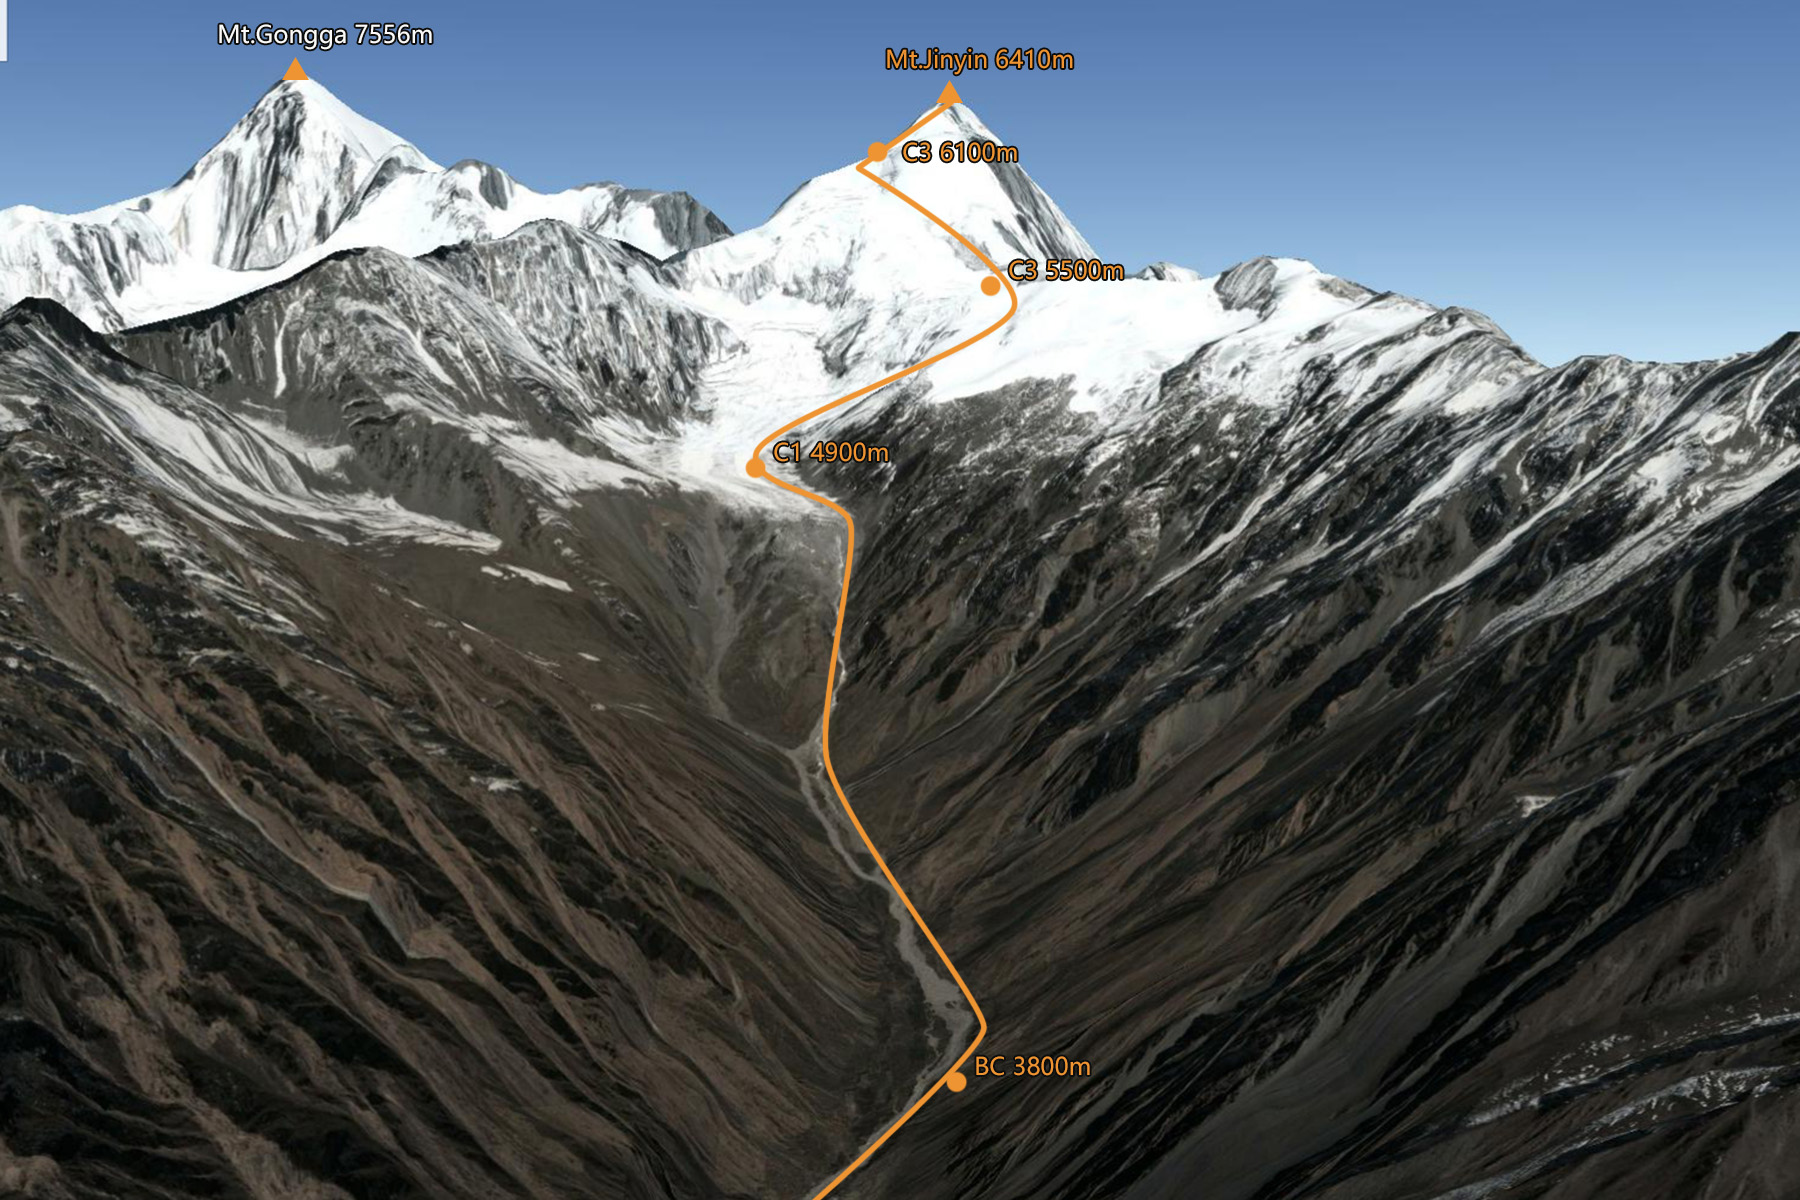 Mt. Jinyin Climbing Map